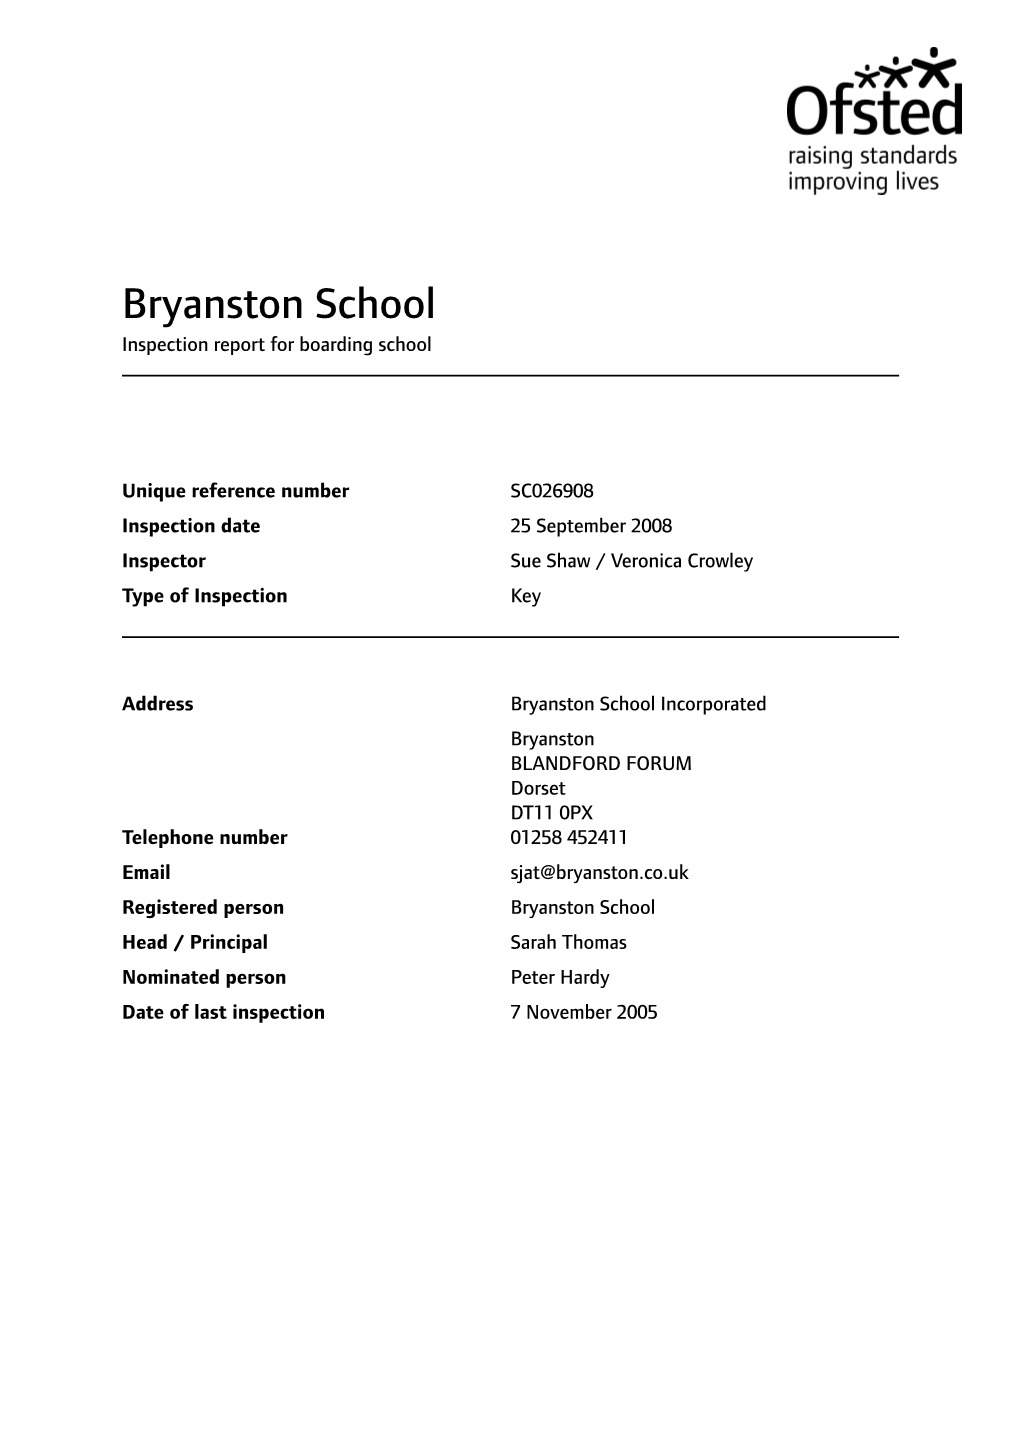 Bryanston School Inspection Report for Boarding School